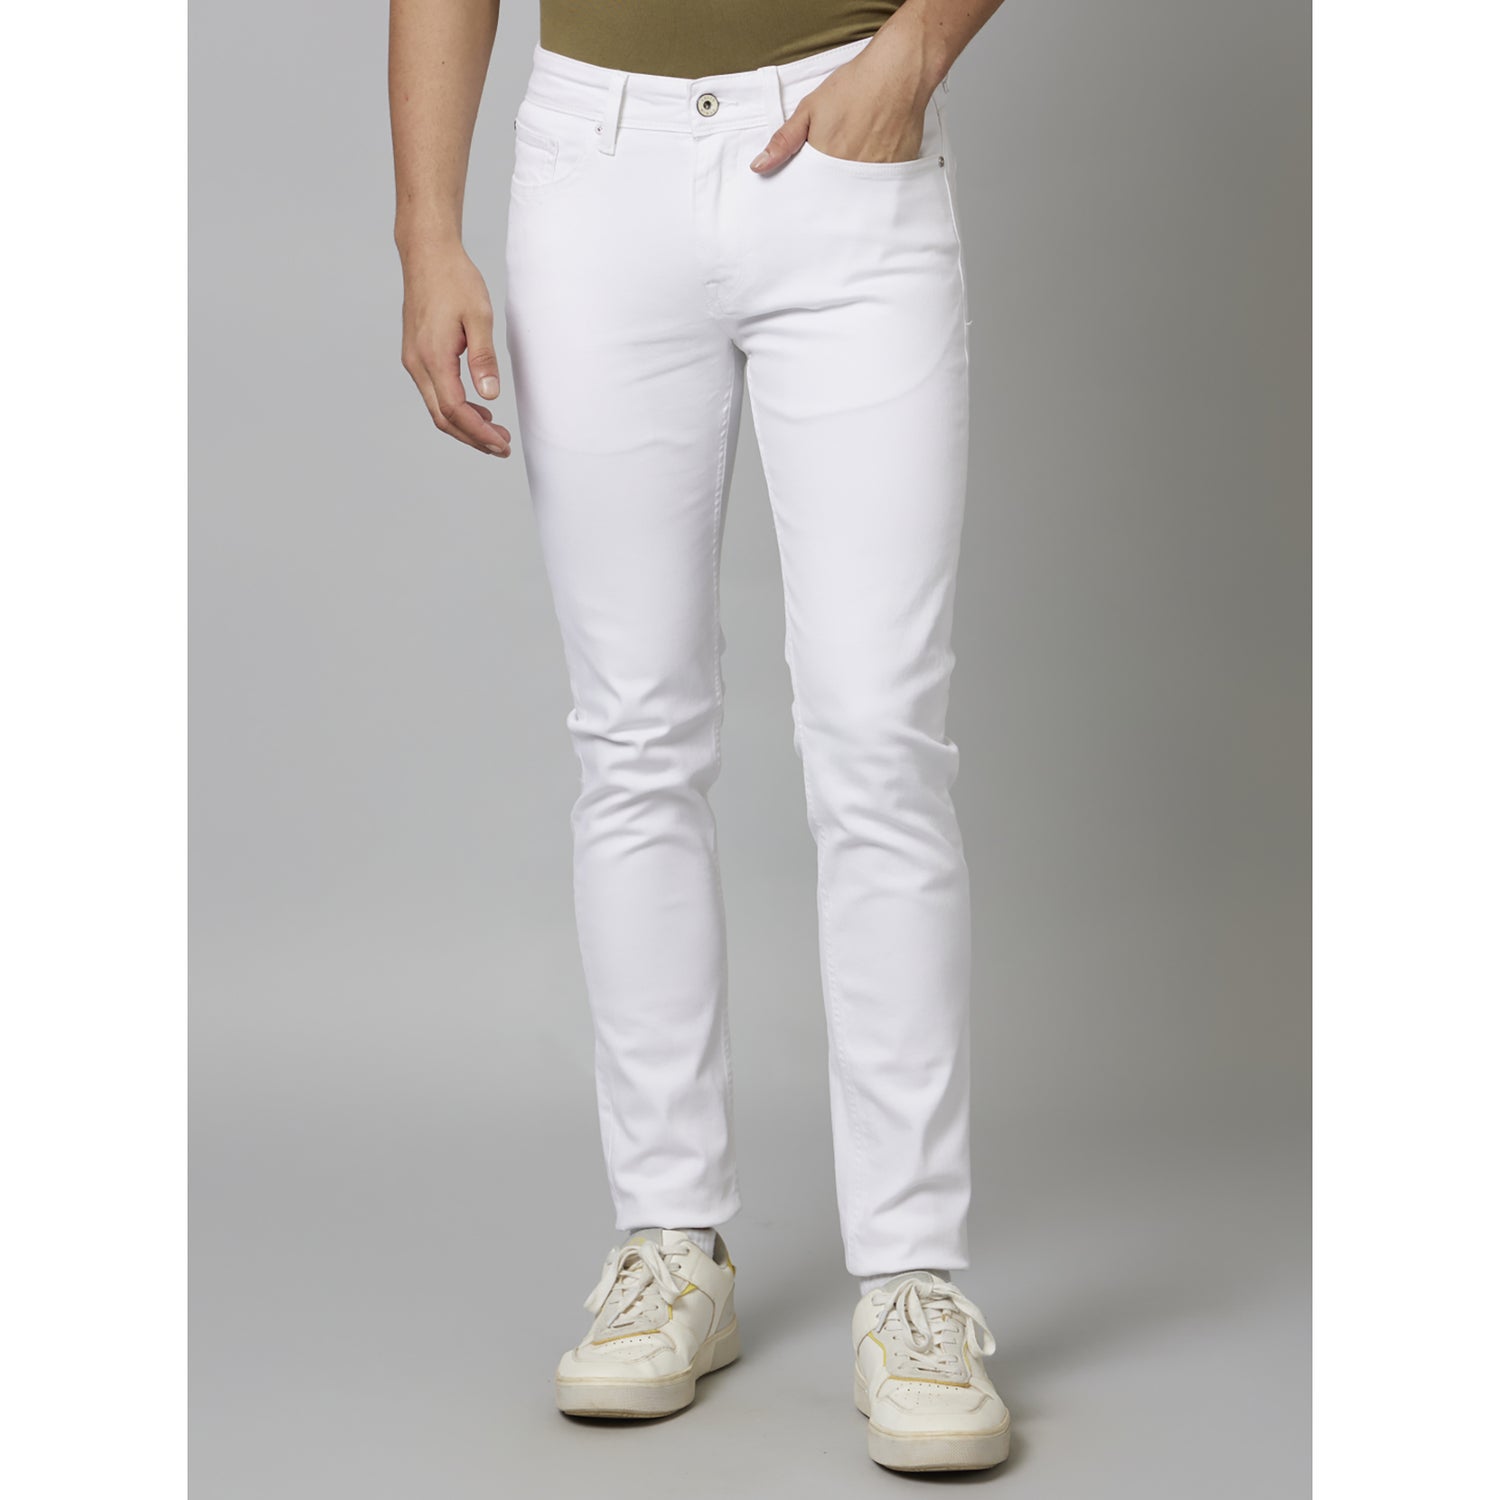 White Solid Cotton Jeans (ANOWHITEIN)